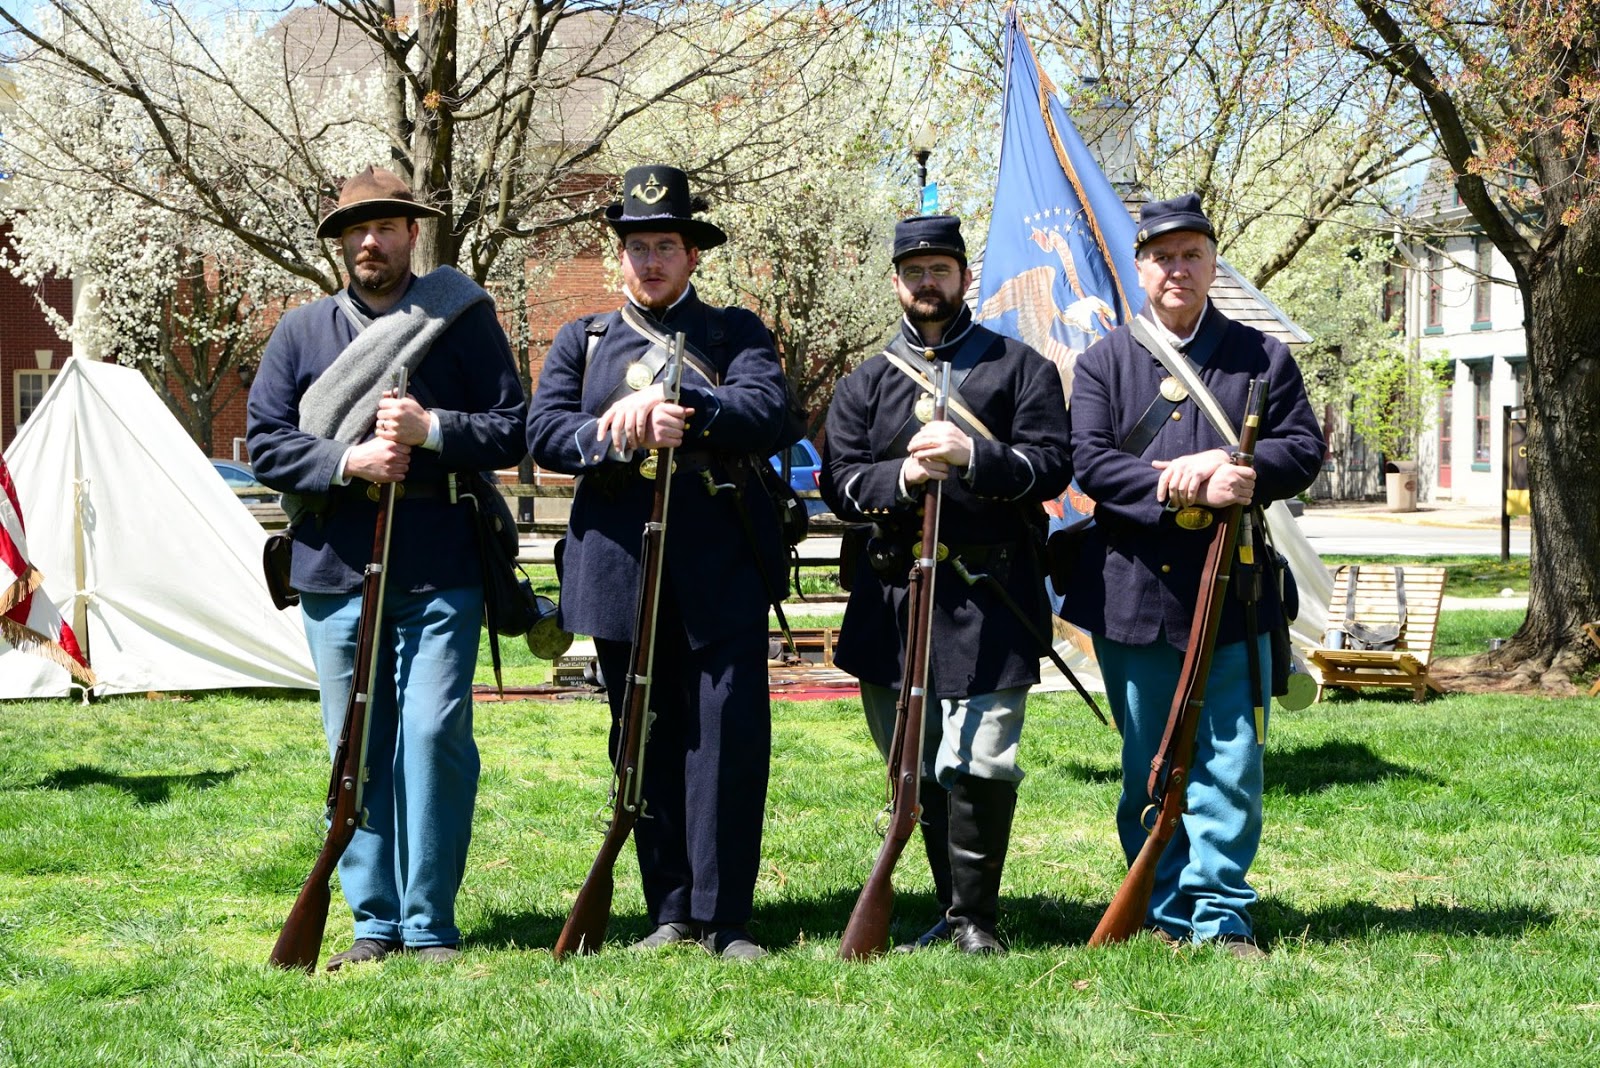 DarkeJournal.com: Darke County Parks Offers Civil War Field Trip